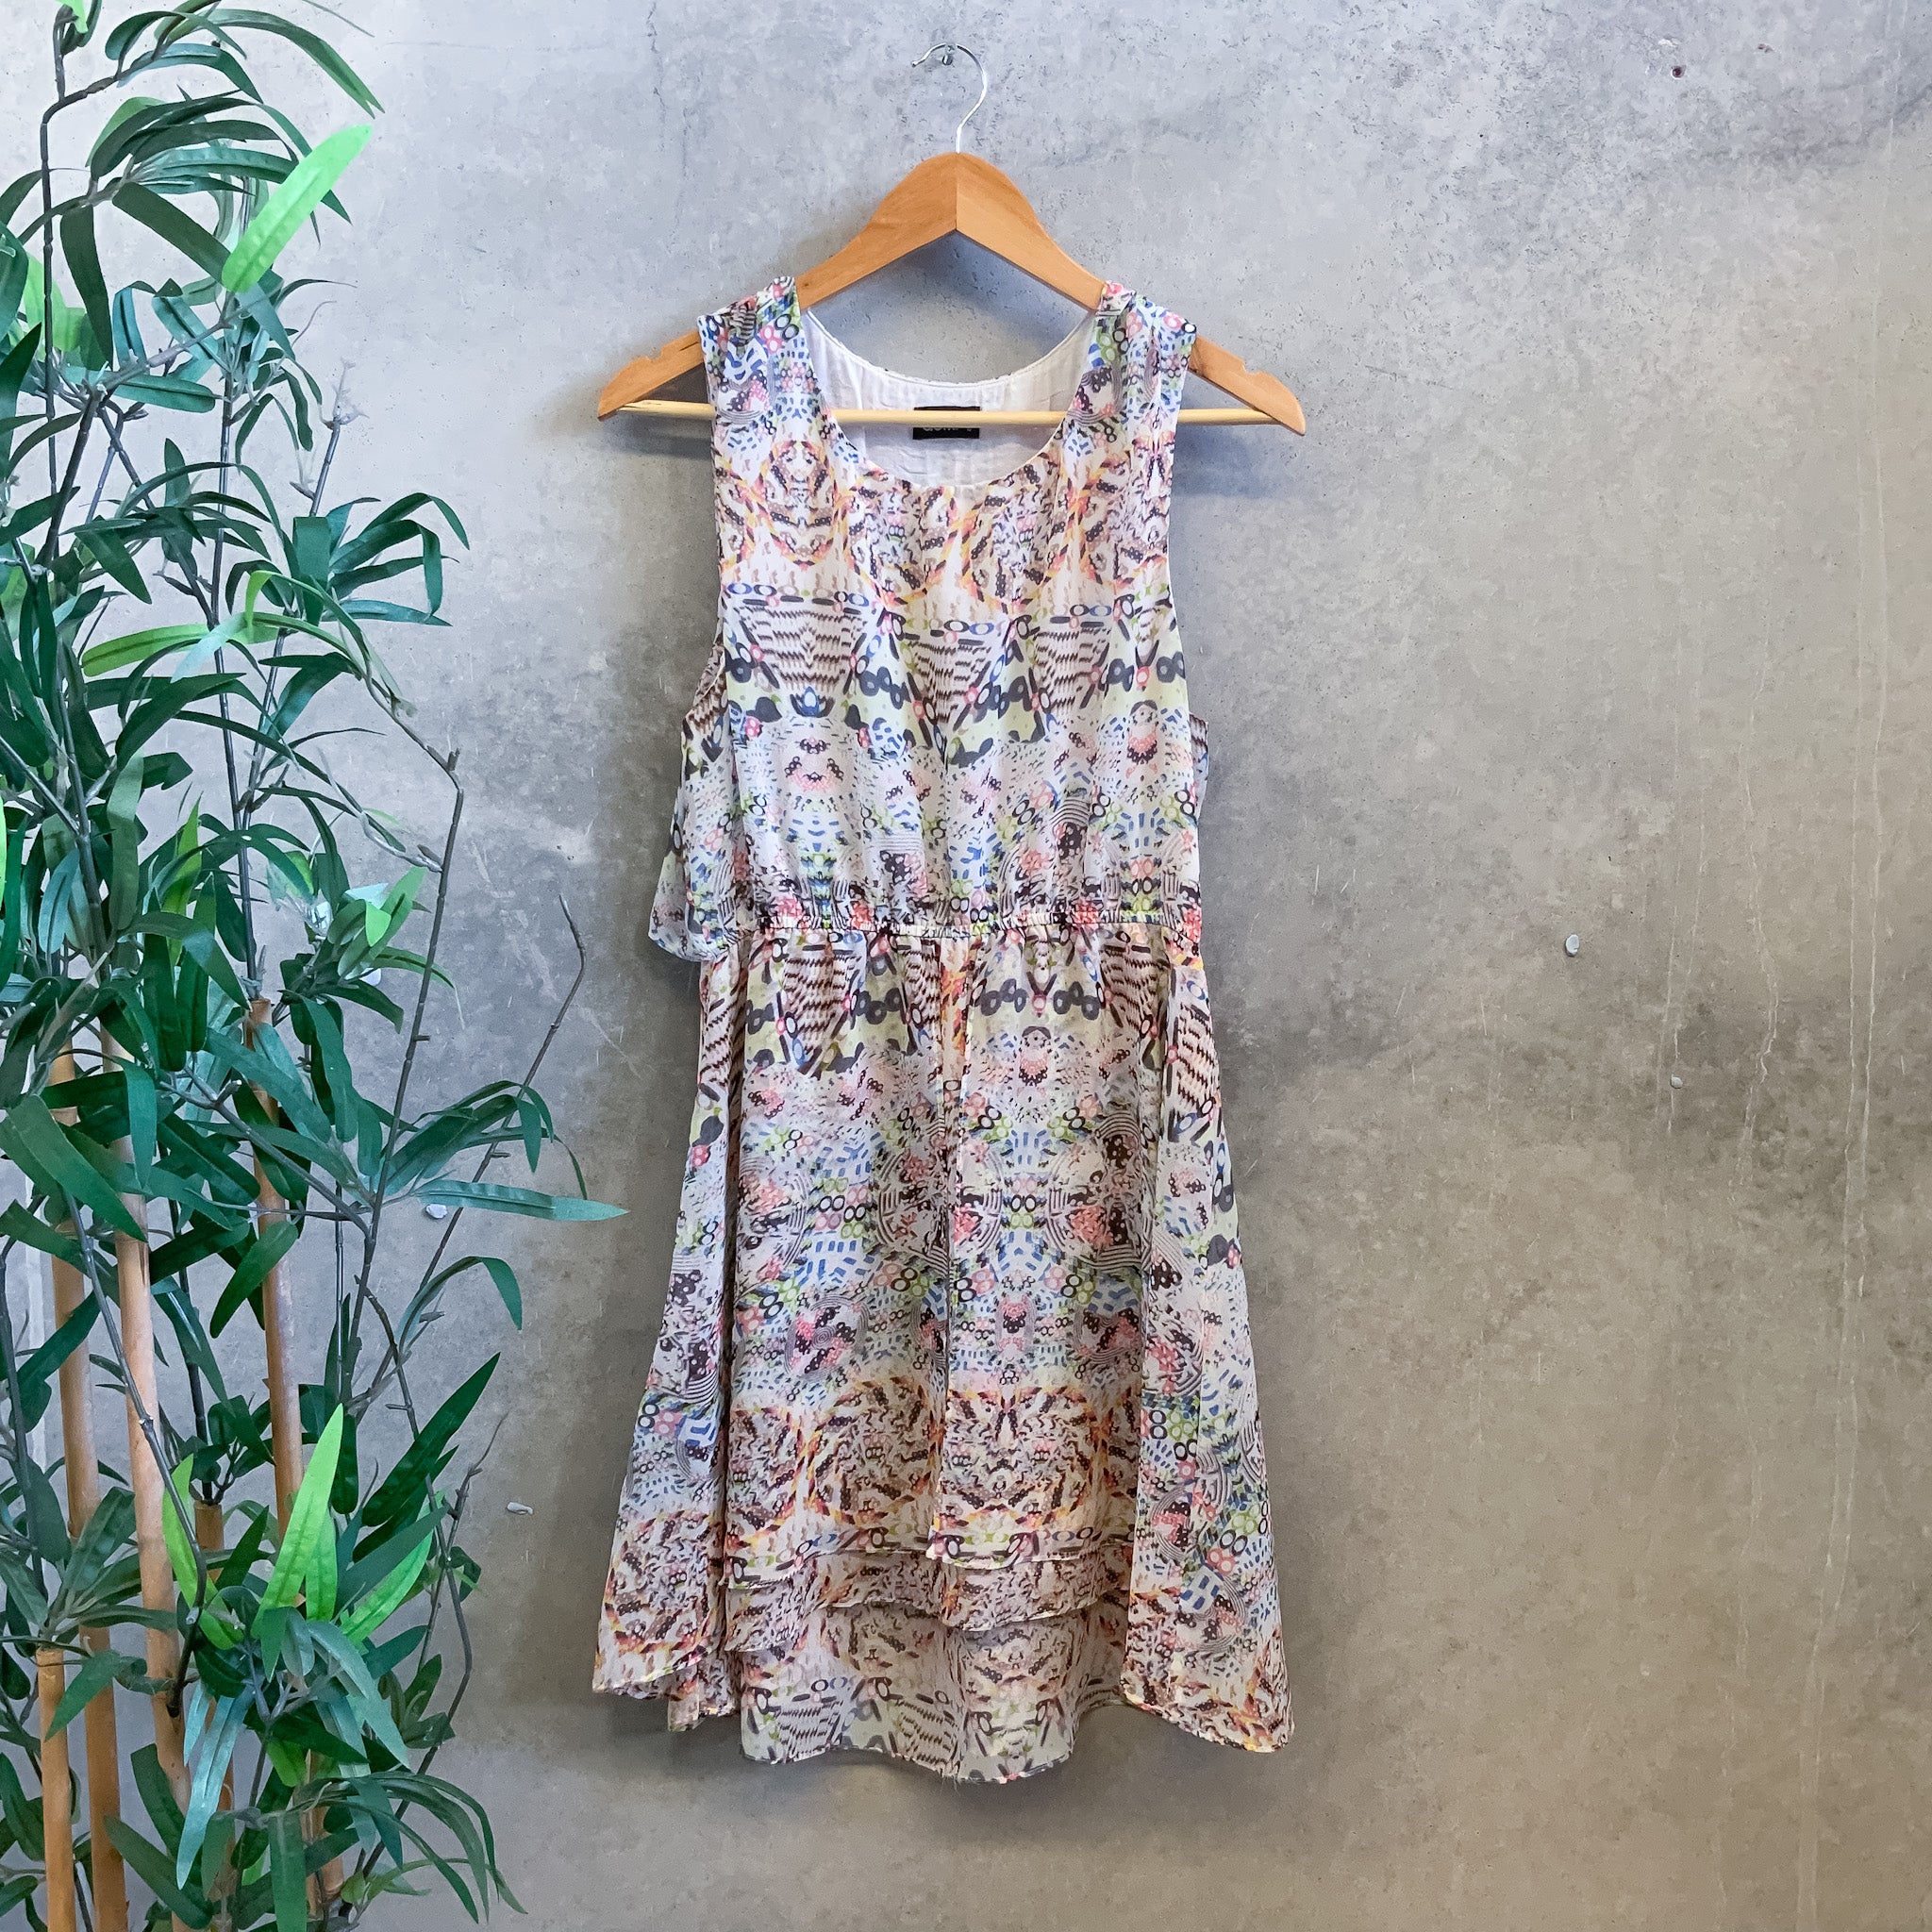 DOTTI Multicolored Abstract Print Sleeveless Casual Mini Dress - Size 10